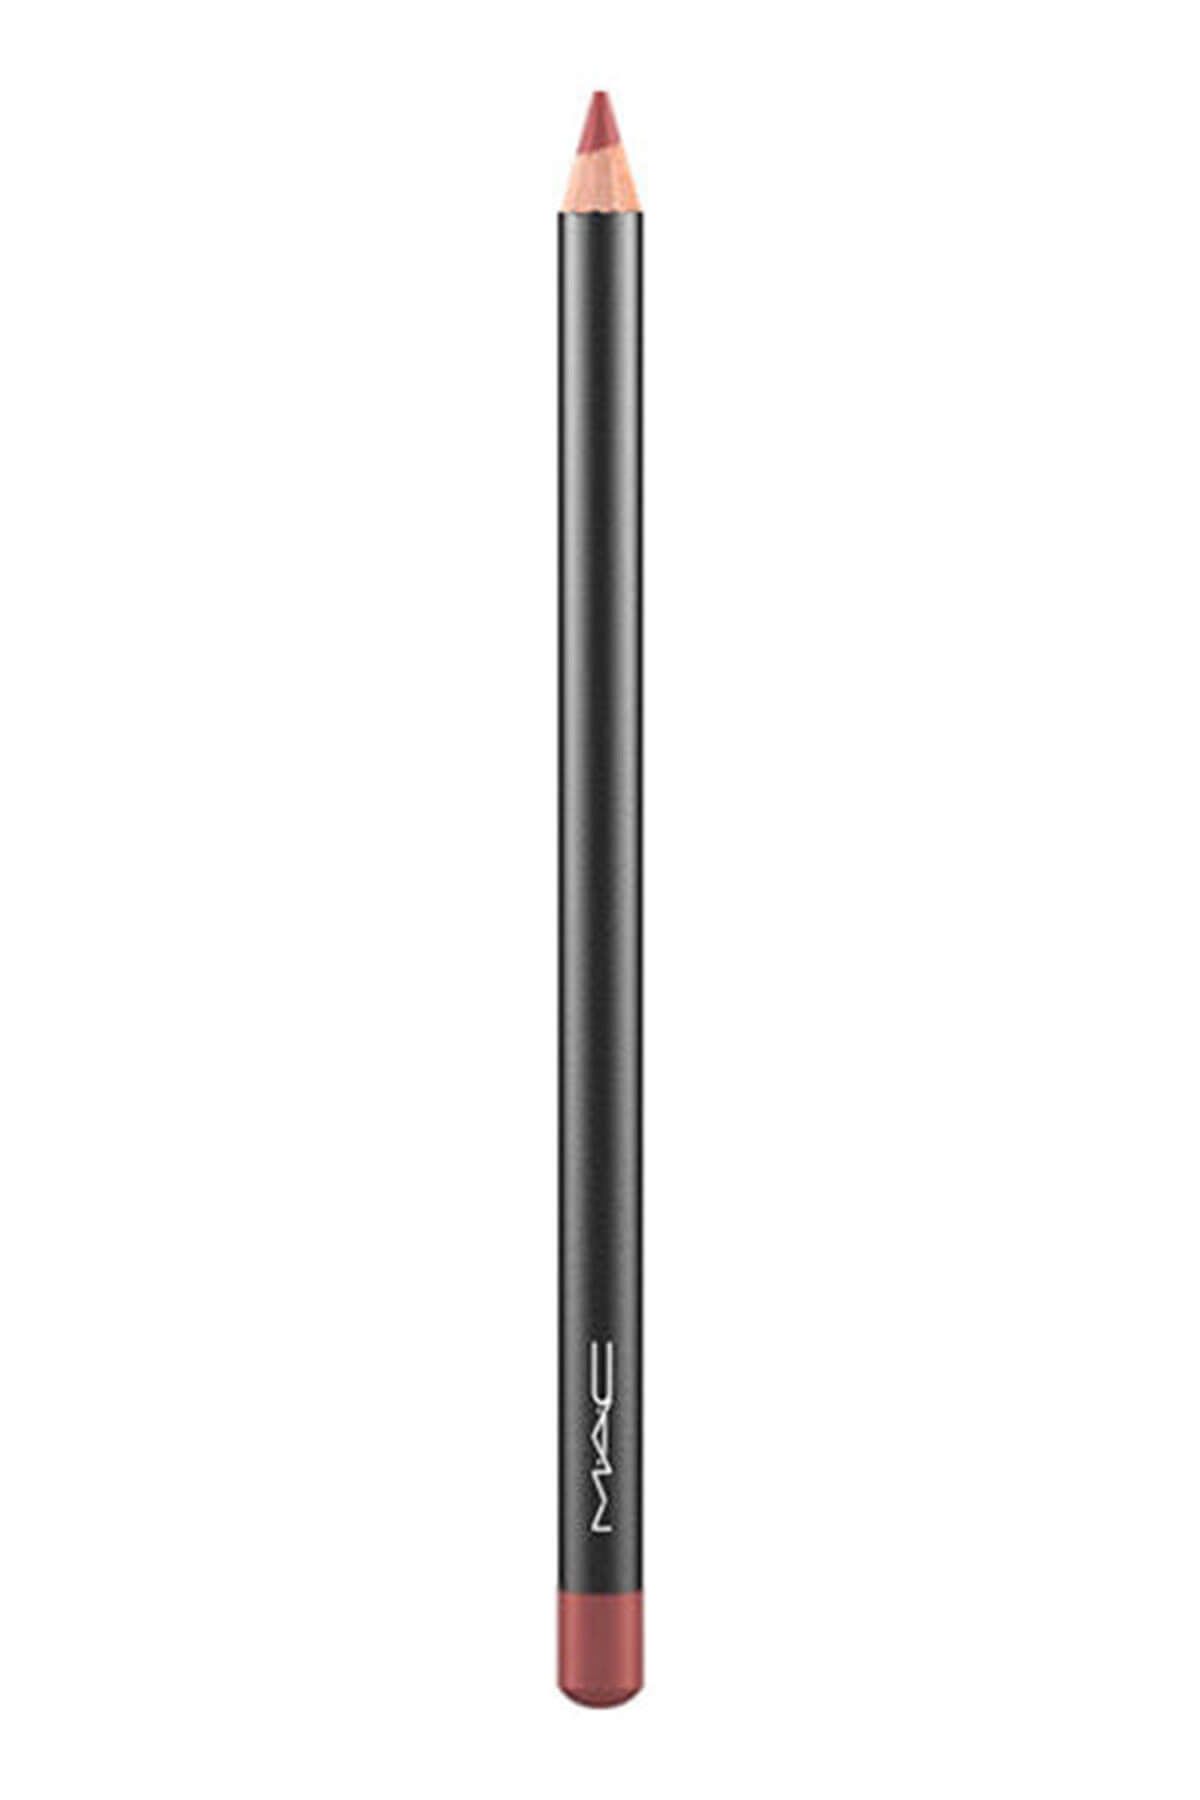 Mac Dudak Kalemi - Lip Pencil Auburn 3 g 773602430017